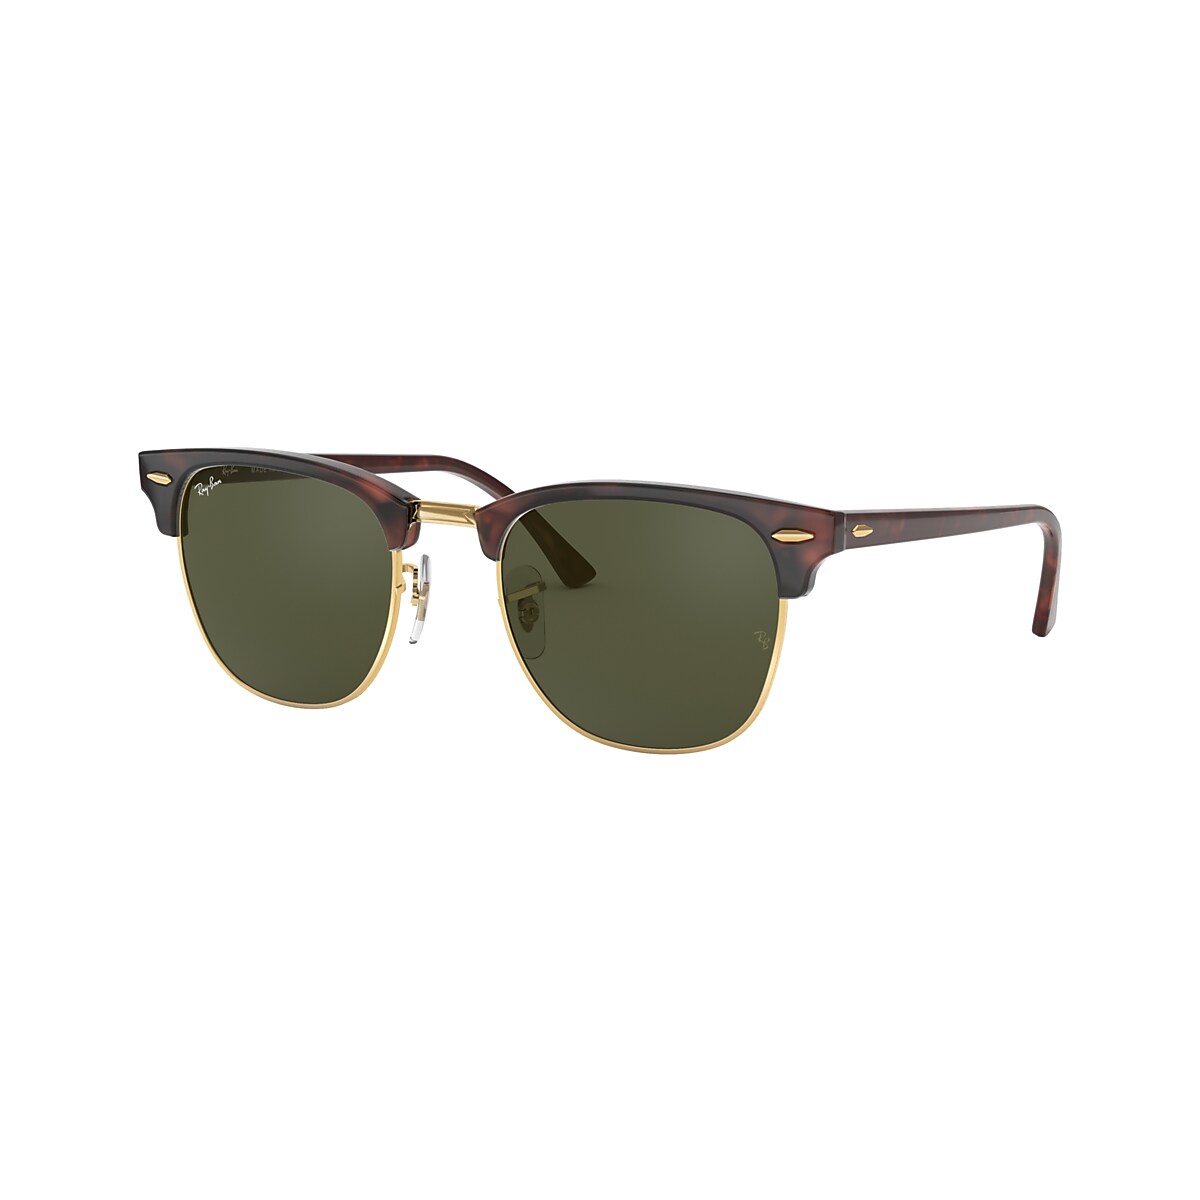 Ray-Ban RB3016 Clubmaster Classic 51 Green & Tortoise On Gold Sunglasses |  Sunglass Hut Australia